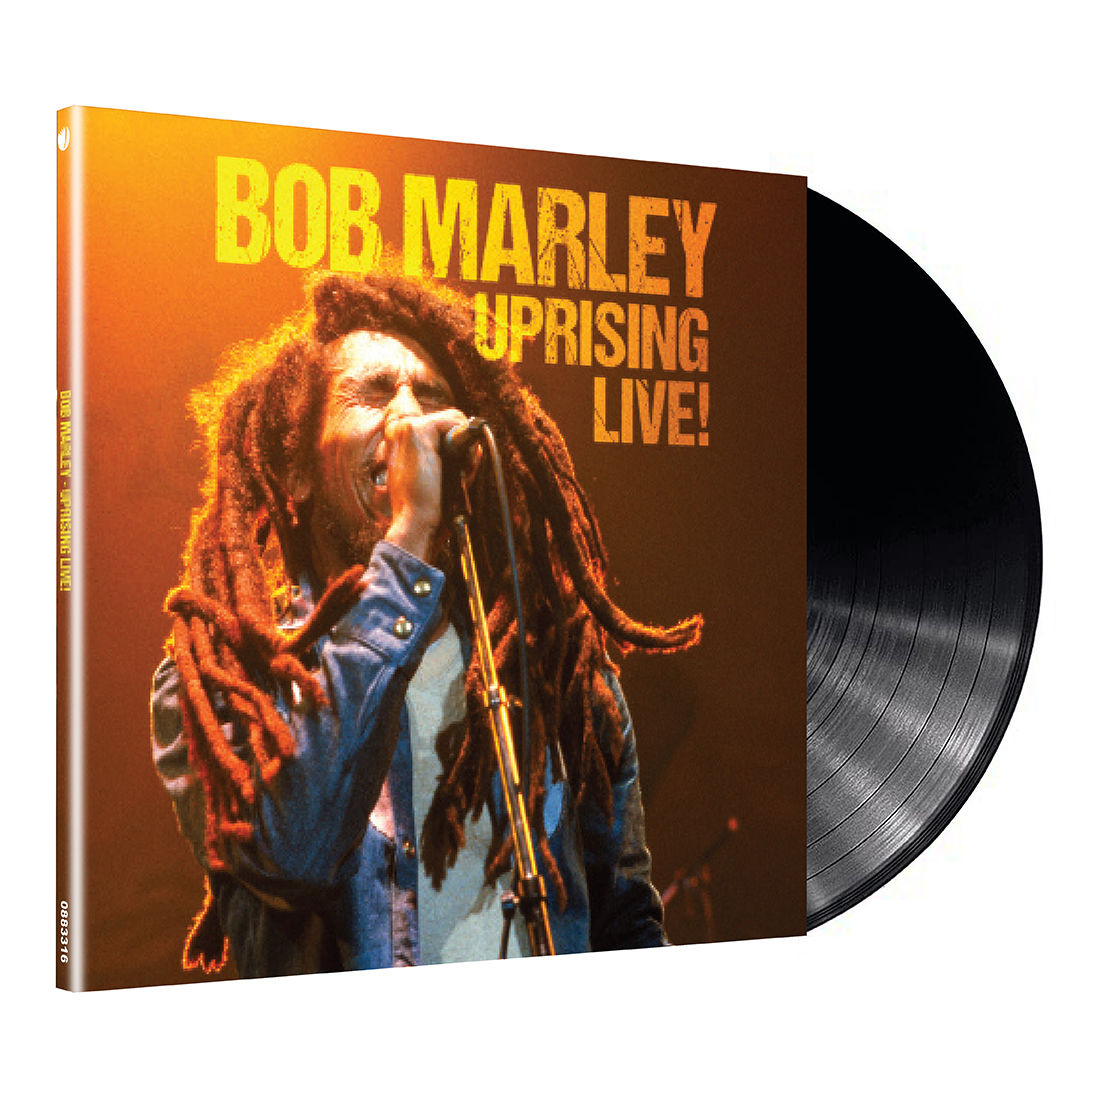 Bob Marley - Uprising Live!: Limited Edition Vinyl 3LP